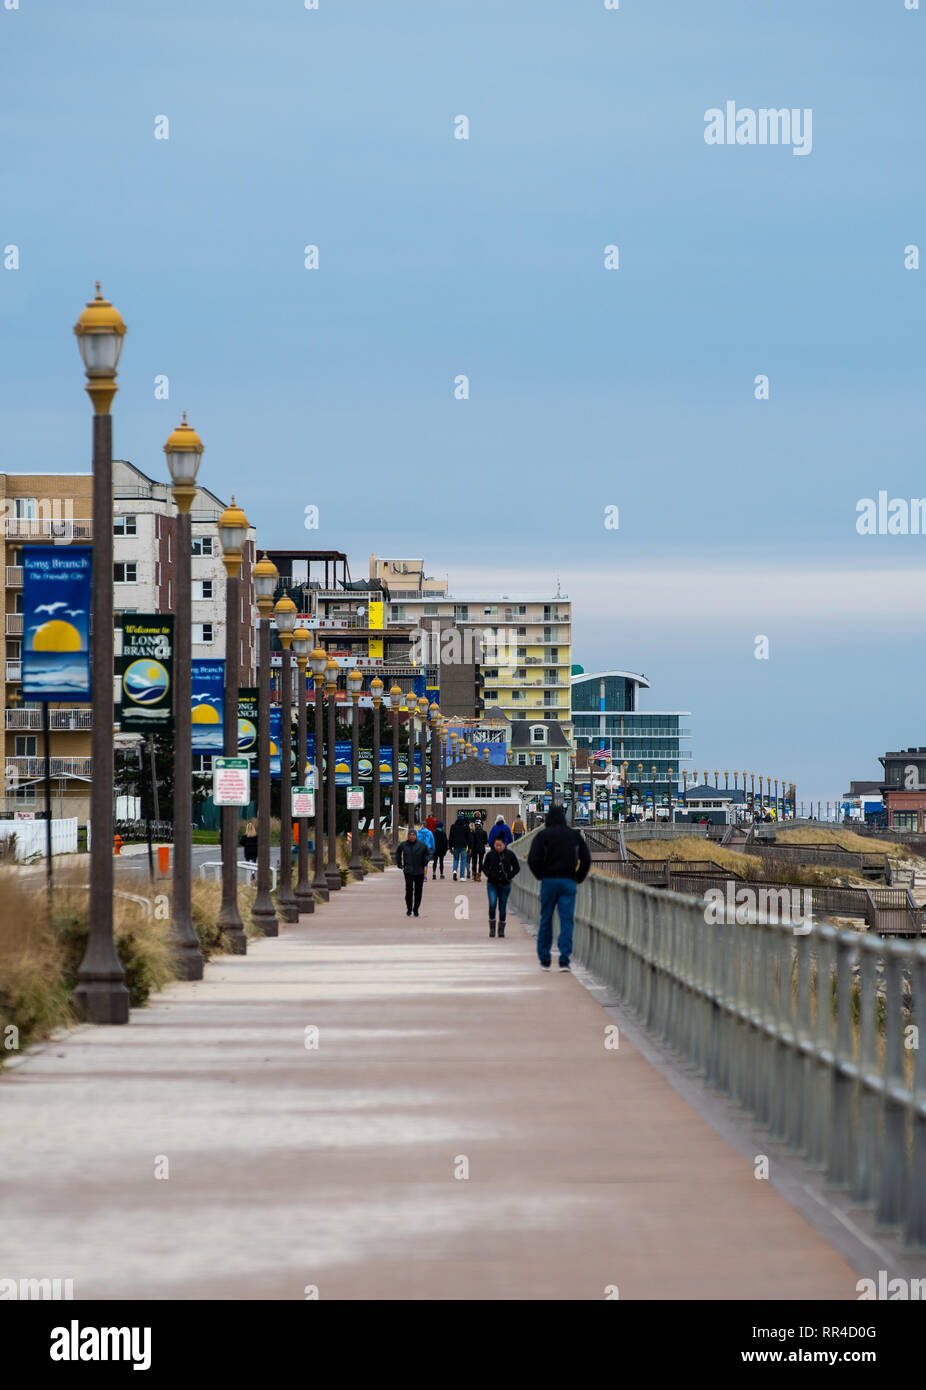 https://c8.alamy.com/comp/RR4D0G/long-branch-united-states-november-18-2018-pedestrians-walk-along-new-jersey-shore-on-the-boardwalk-alongside-ocean-avenue-RR4D0G.jpg